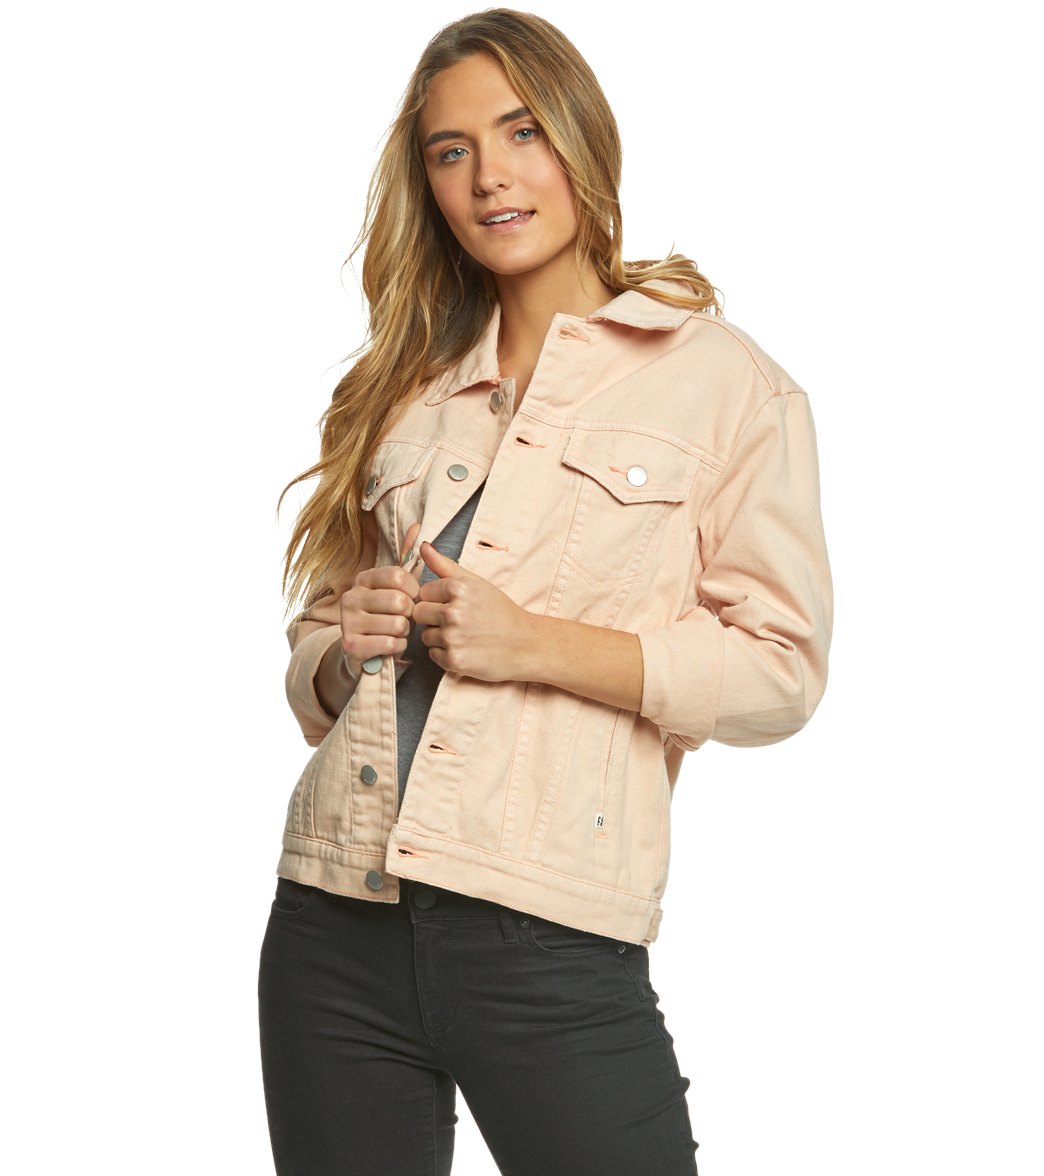 Billabong Always Truckin Denim Jacket - Pearl Pink Medium Cotton - Swimoutlet.com